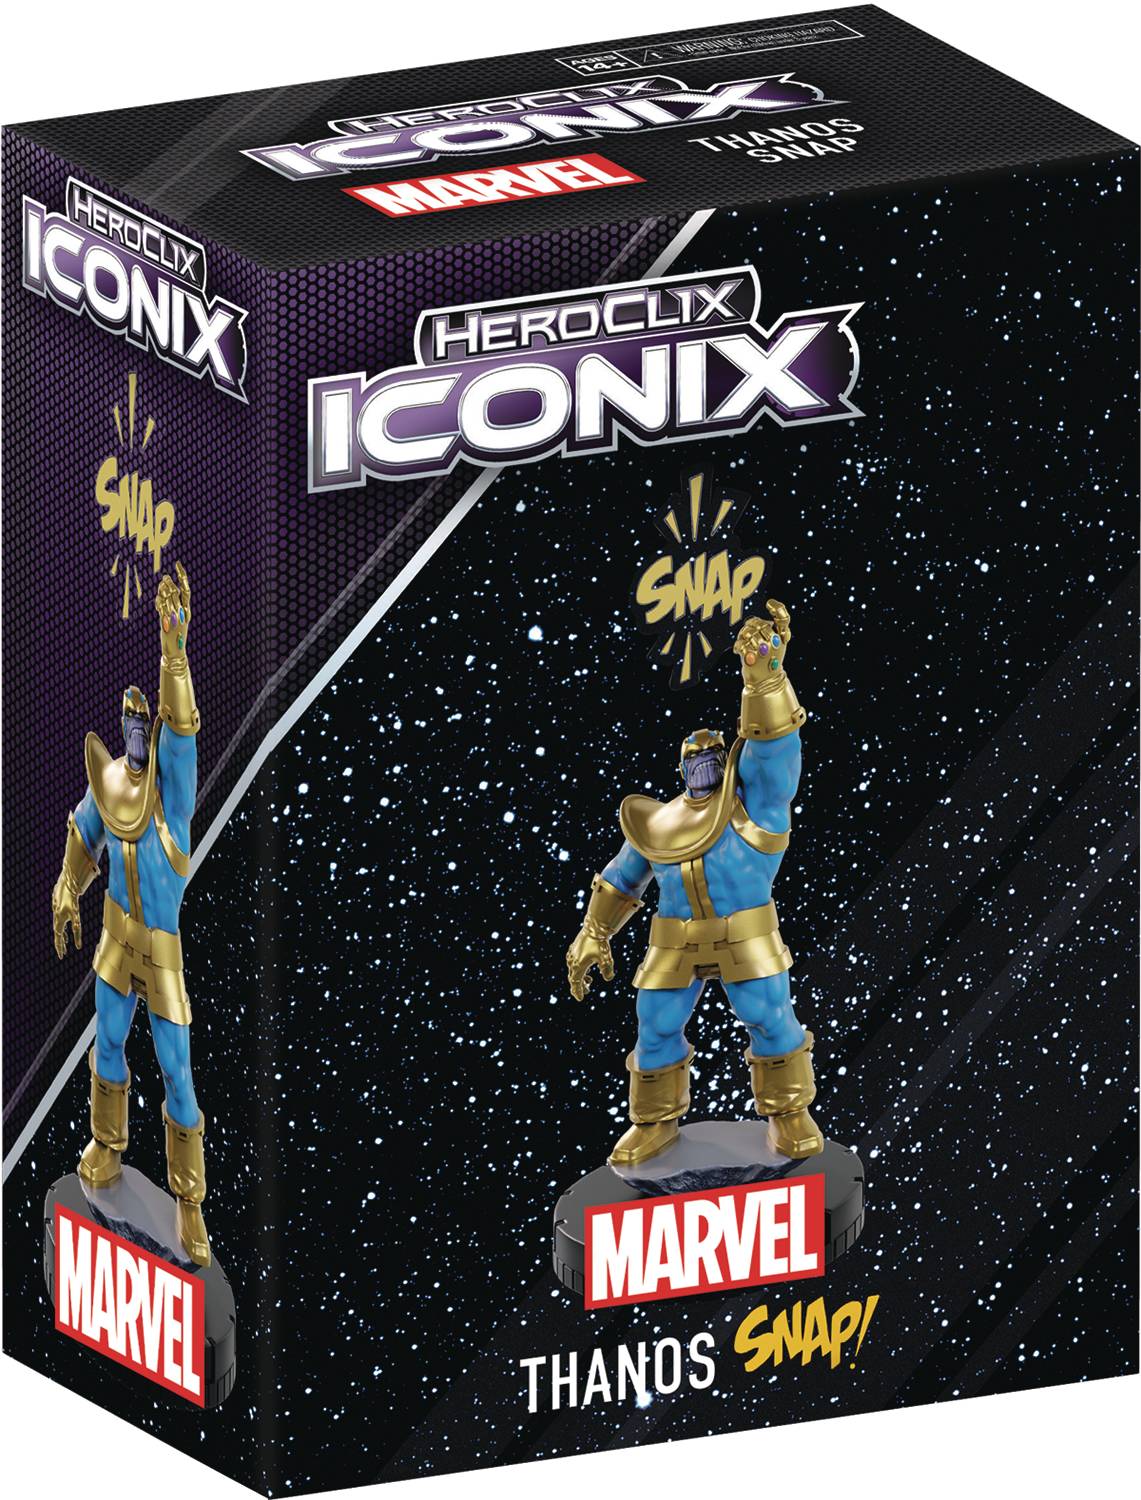 Heroclix Iconix - Thanos Snap